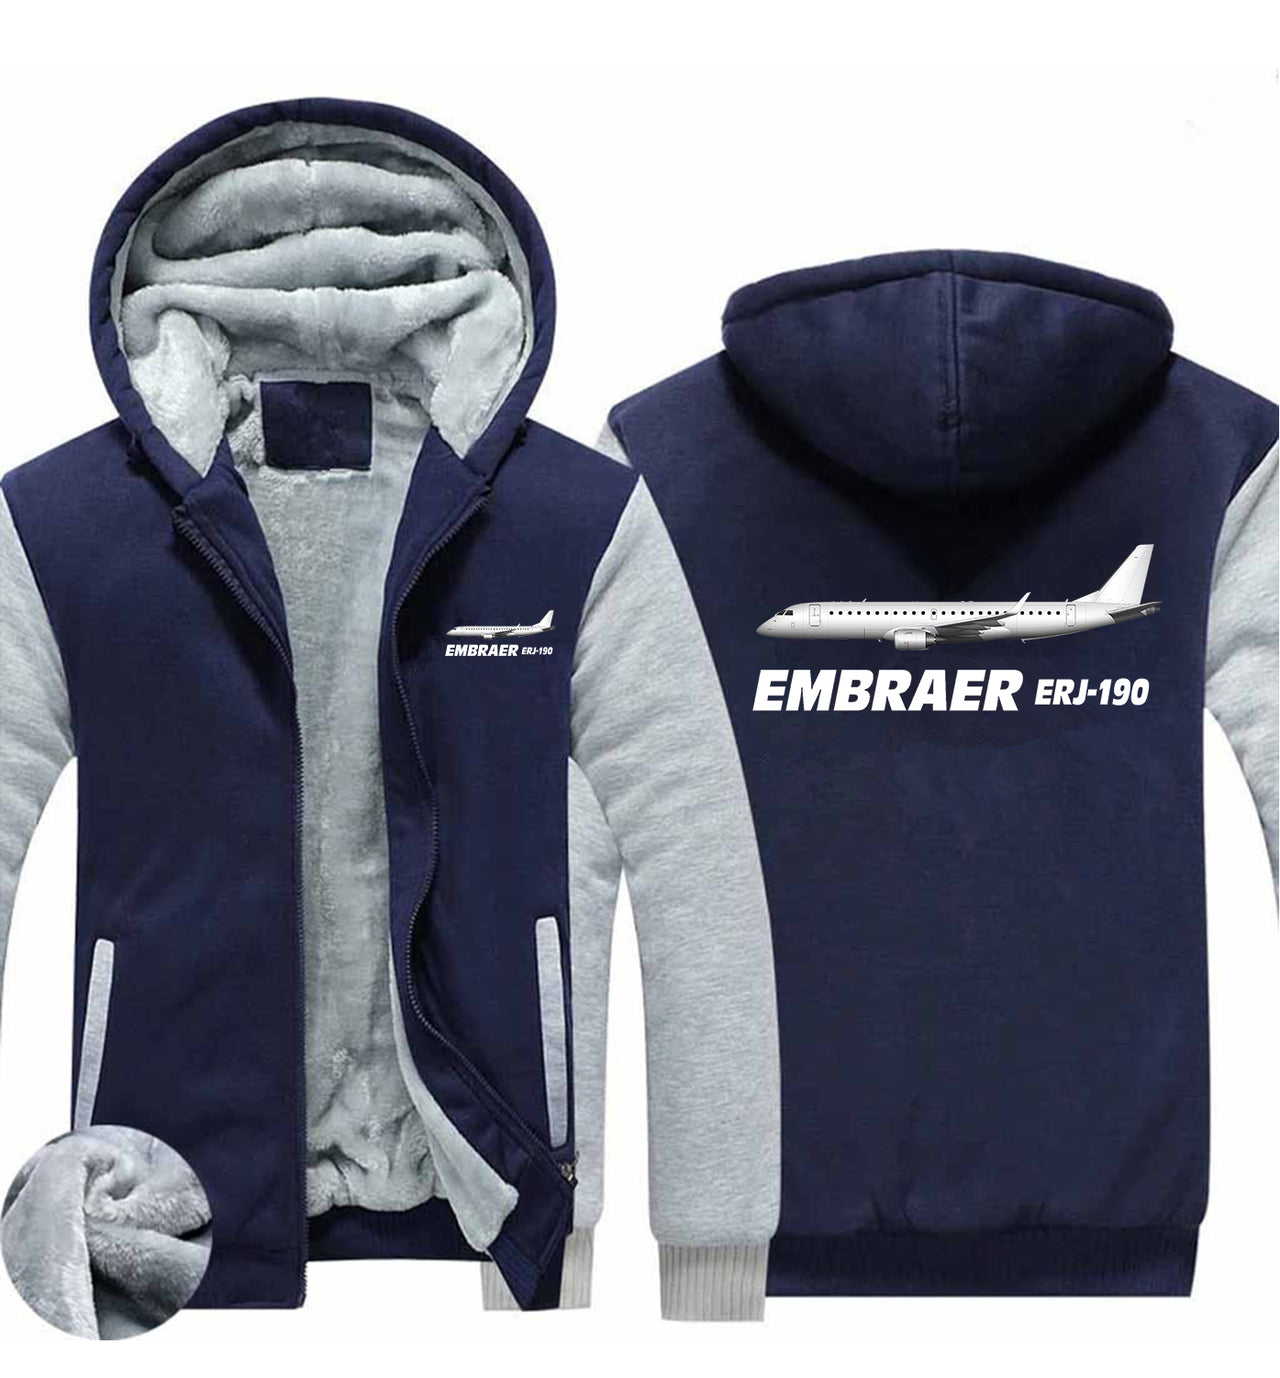 The Embraer ERJ-190 Designed Zipped Sweatshirts